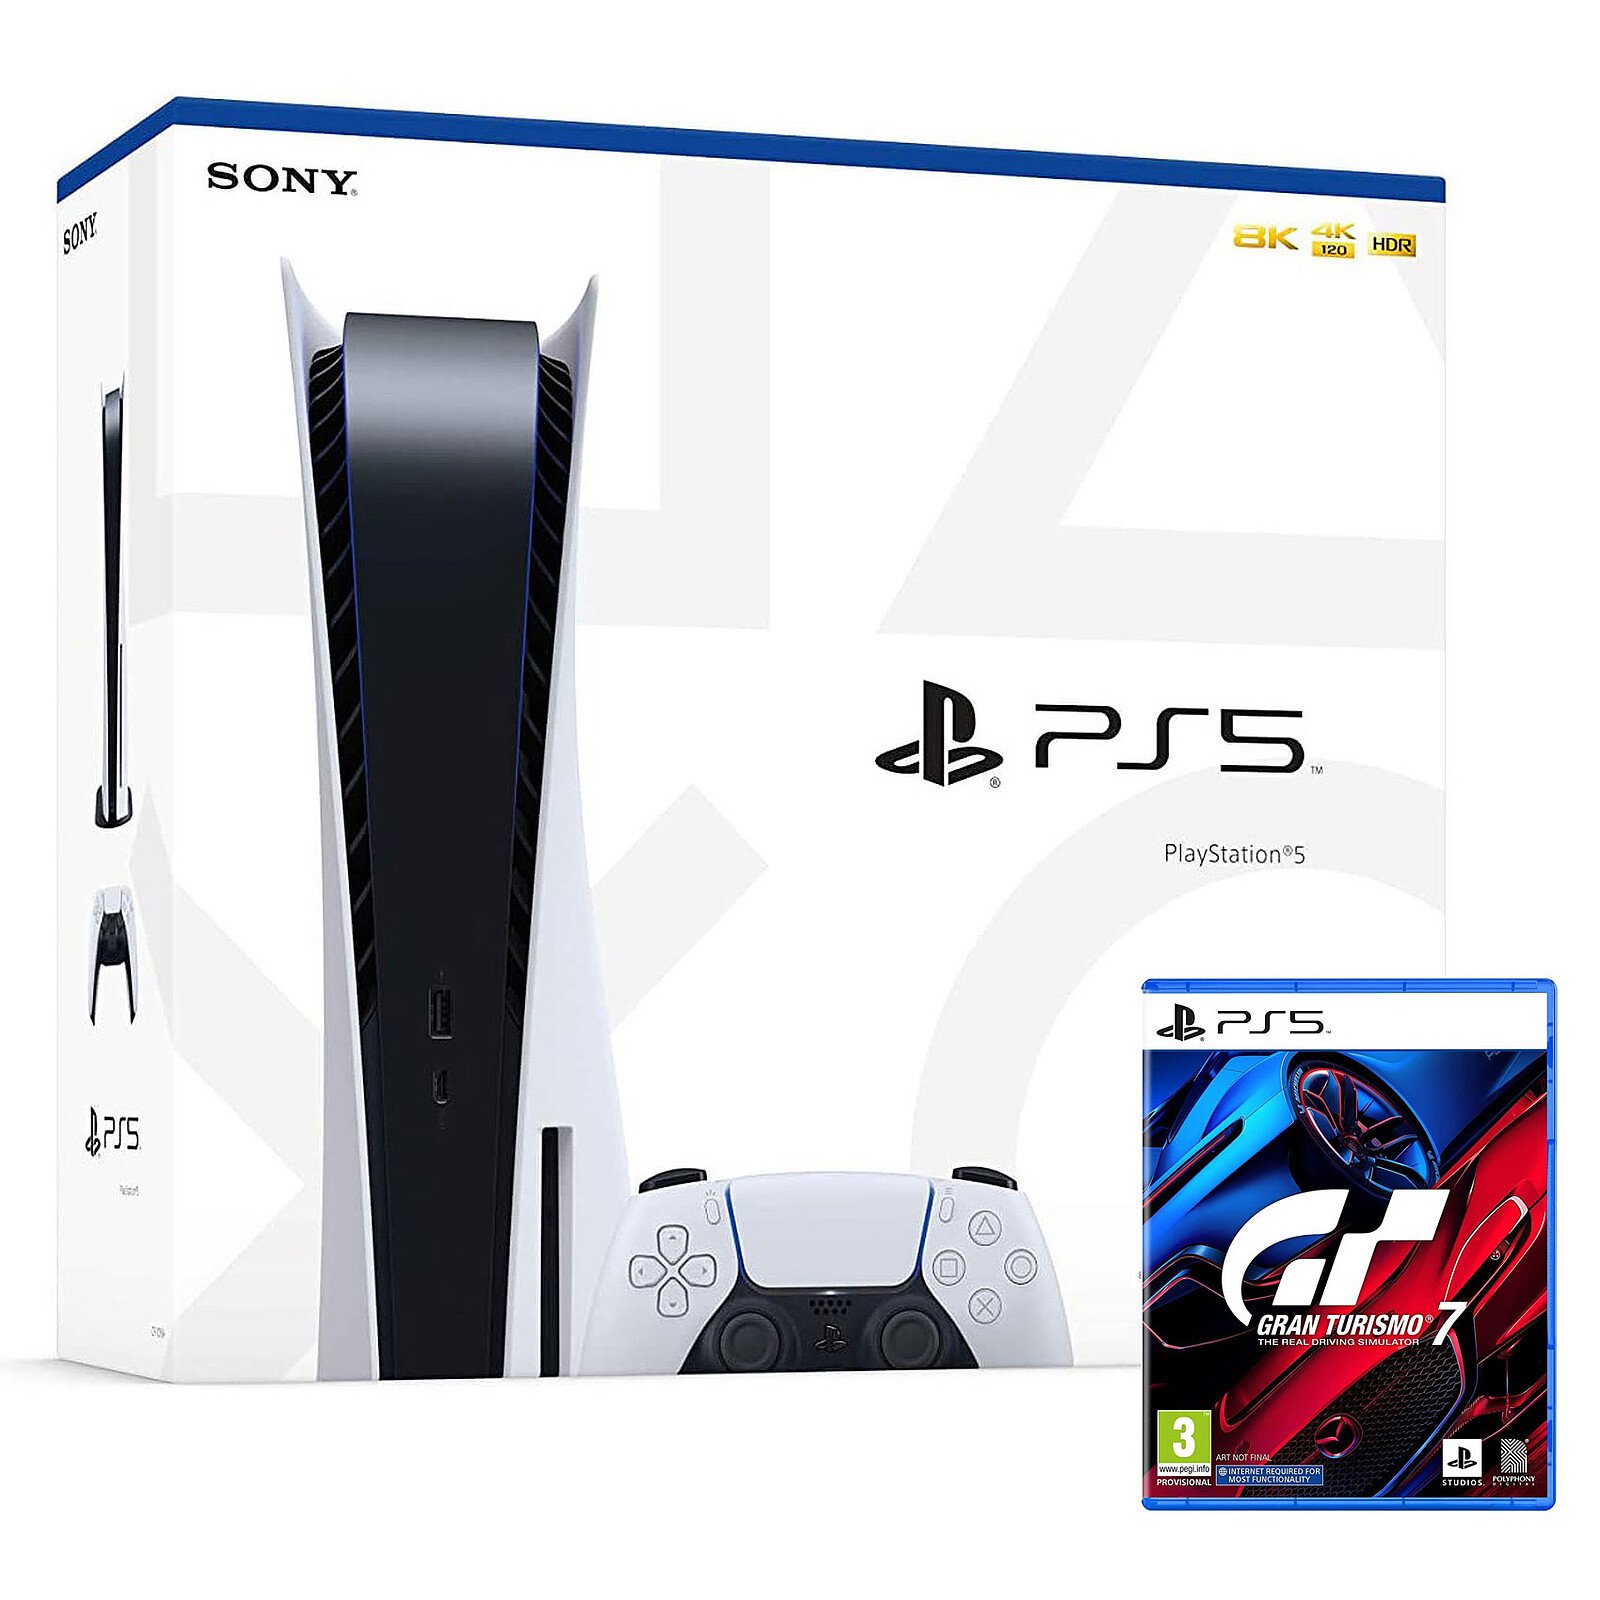 Sony PlayStation 5 + 3-year LDLC Gran Turismo - console warranty 7 PS5 